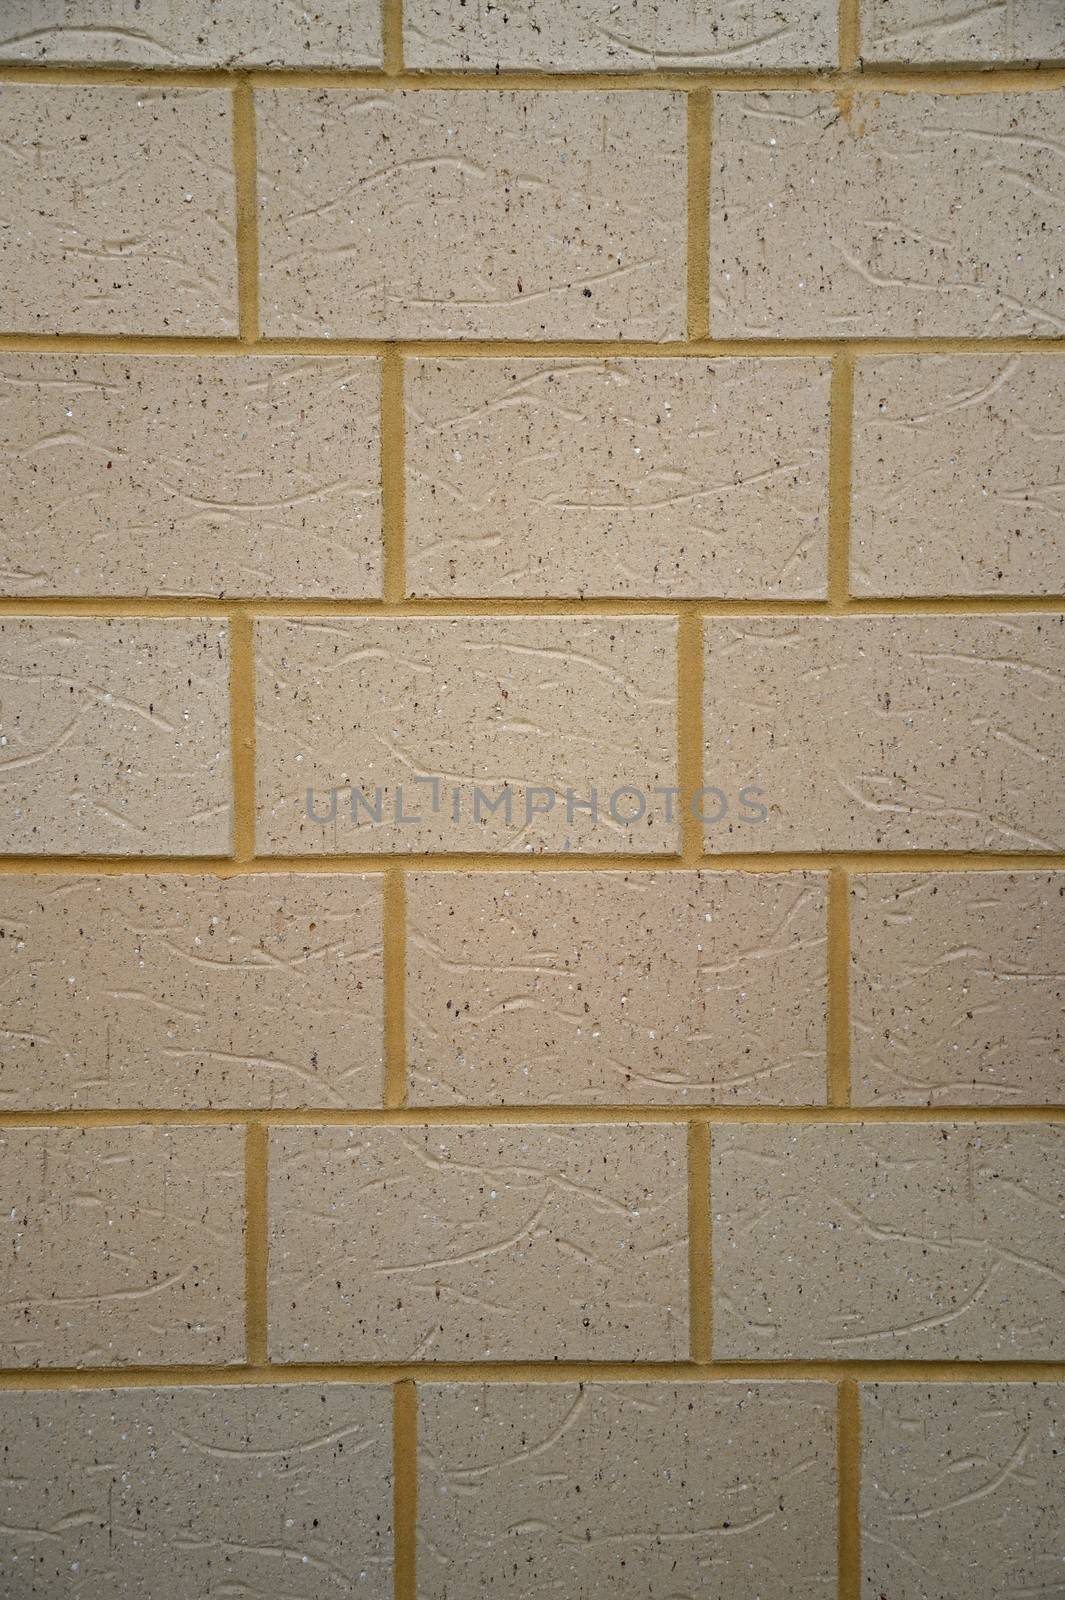 Brick Wall by Kitch